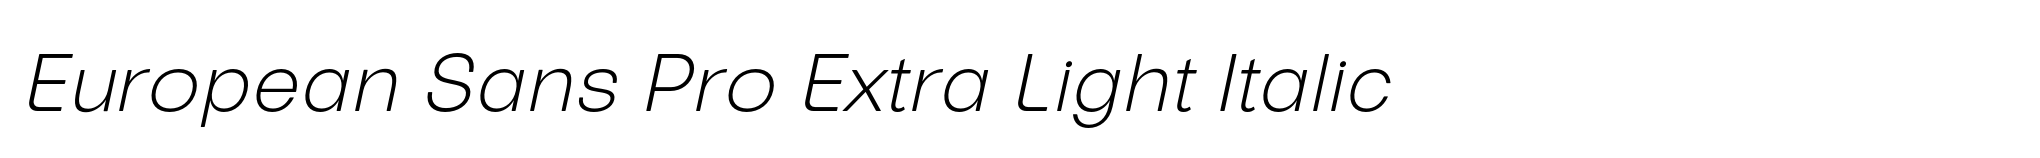 European Sans Pro Extra Light Italic image